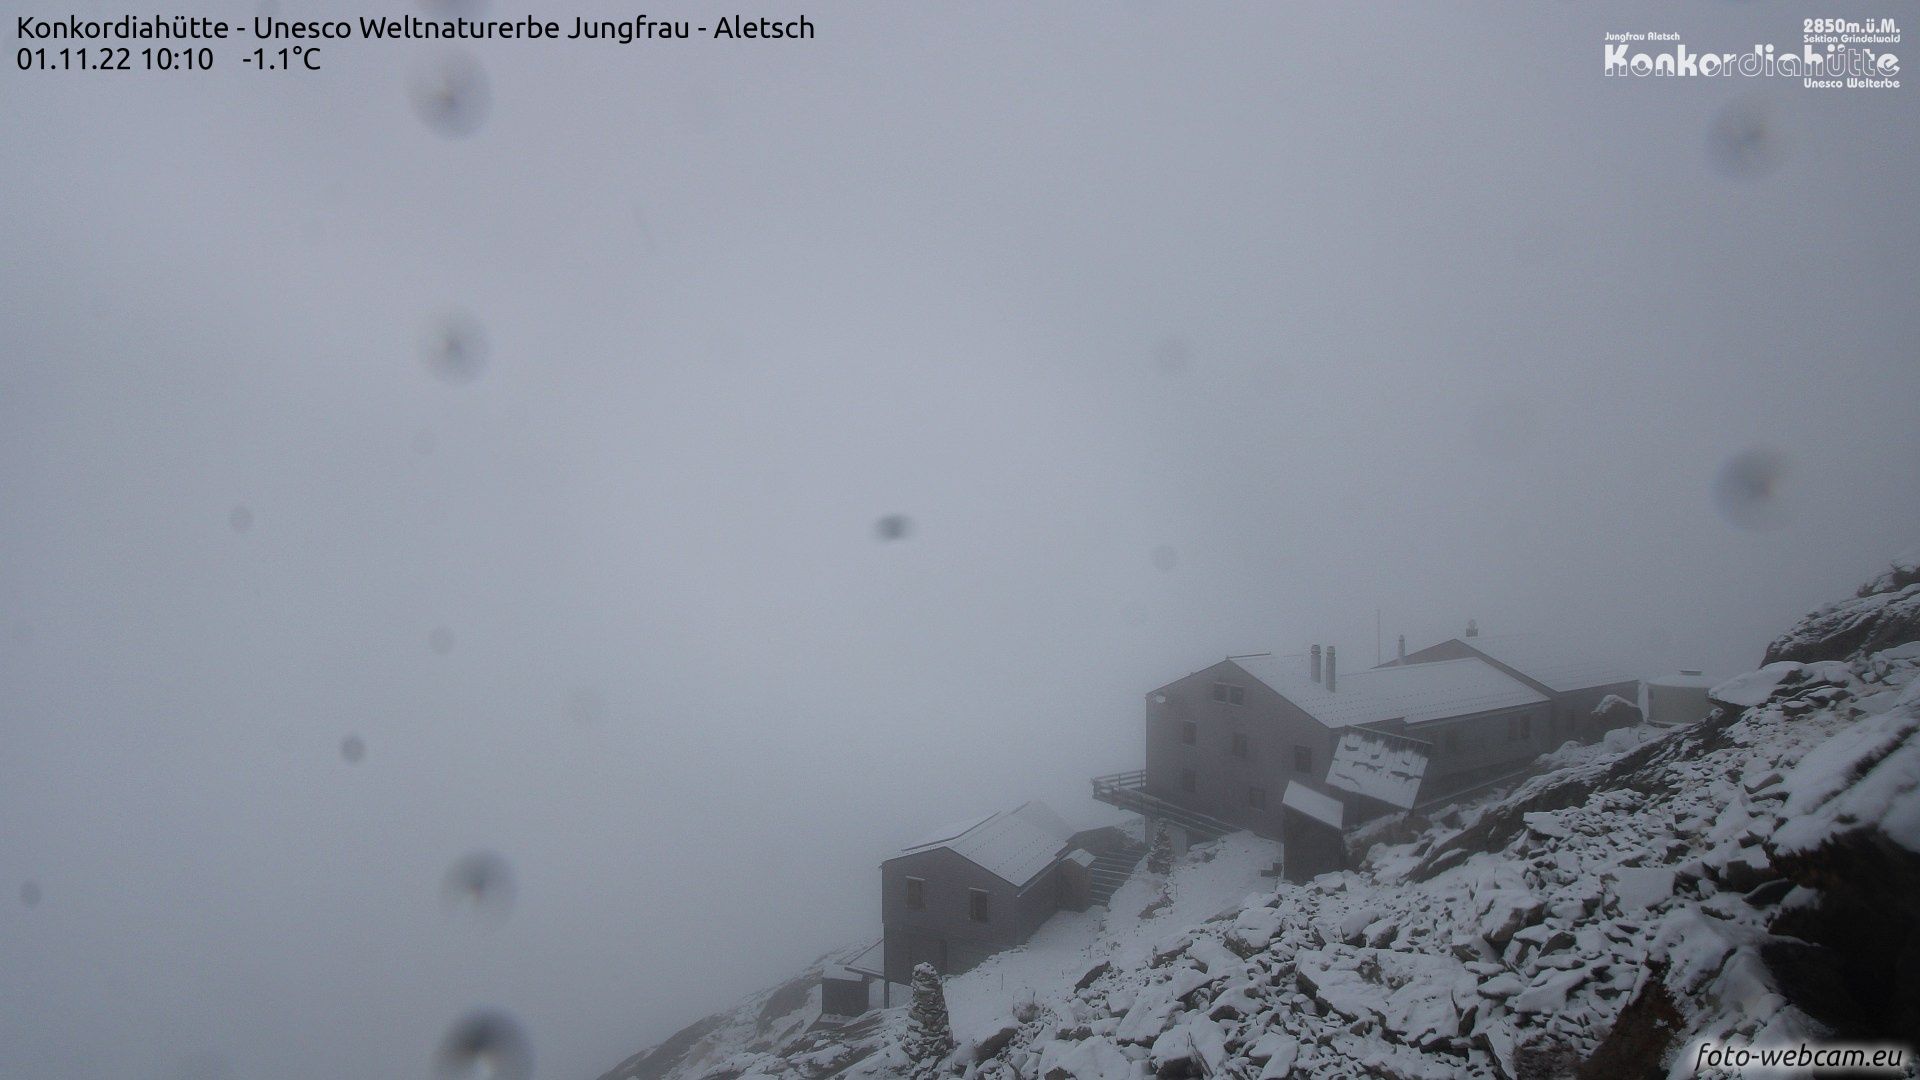 Meanwhile, it is also snowing at the Konkordiahütte (Aletschgletscher) (foto-webcam.eu)